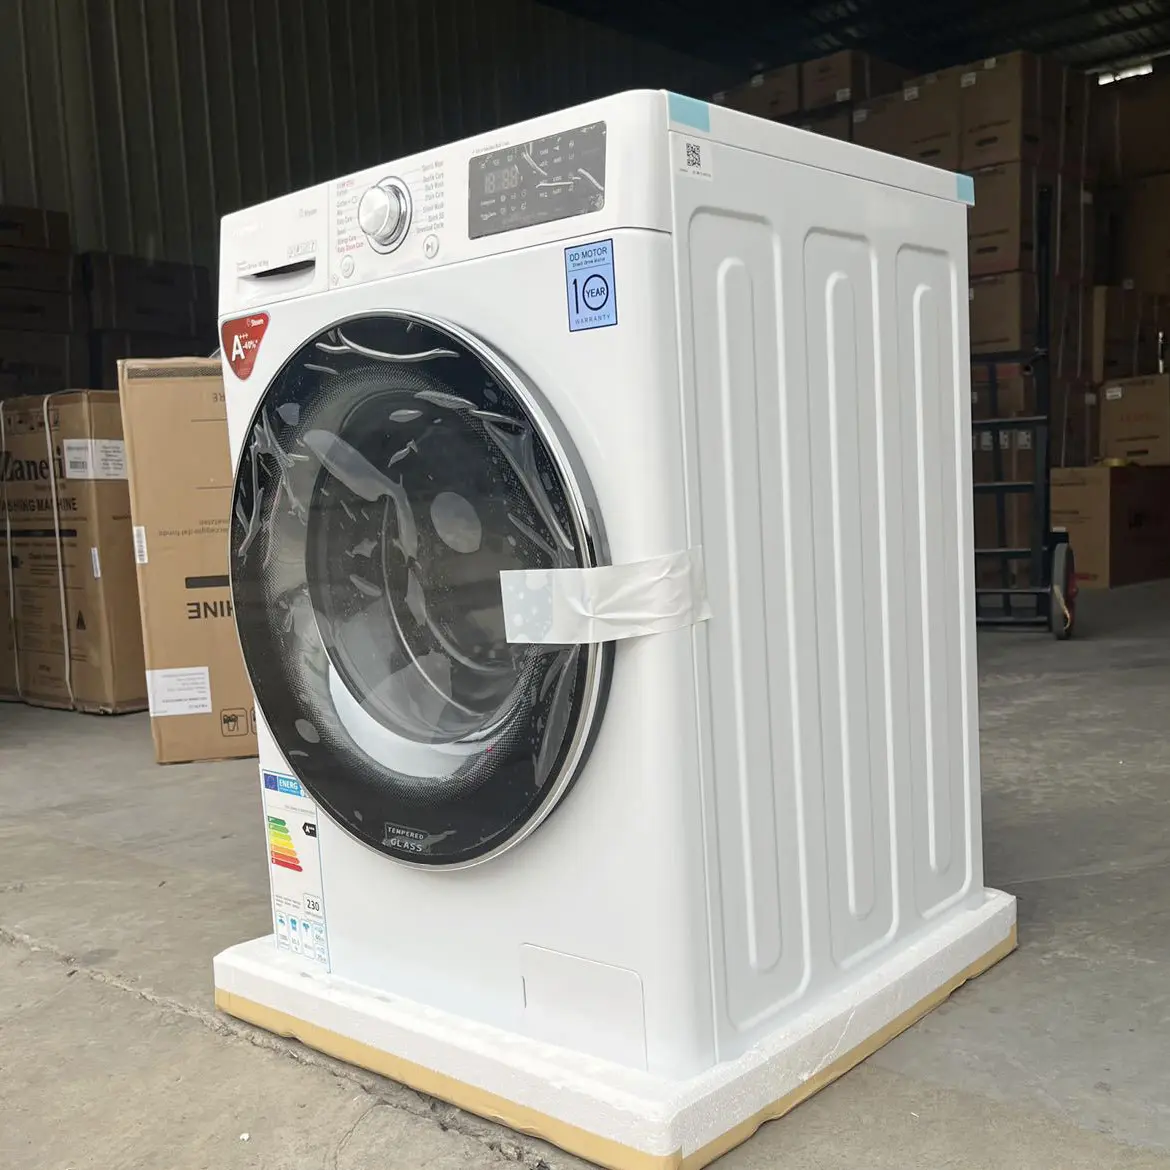 New washing tank drum washing machine 10.5 kg household washing machine export European regulations